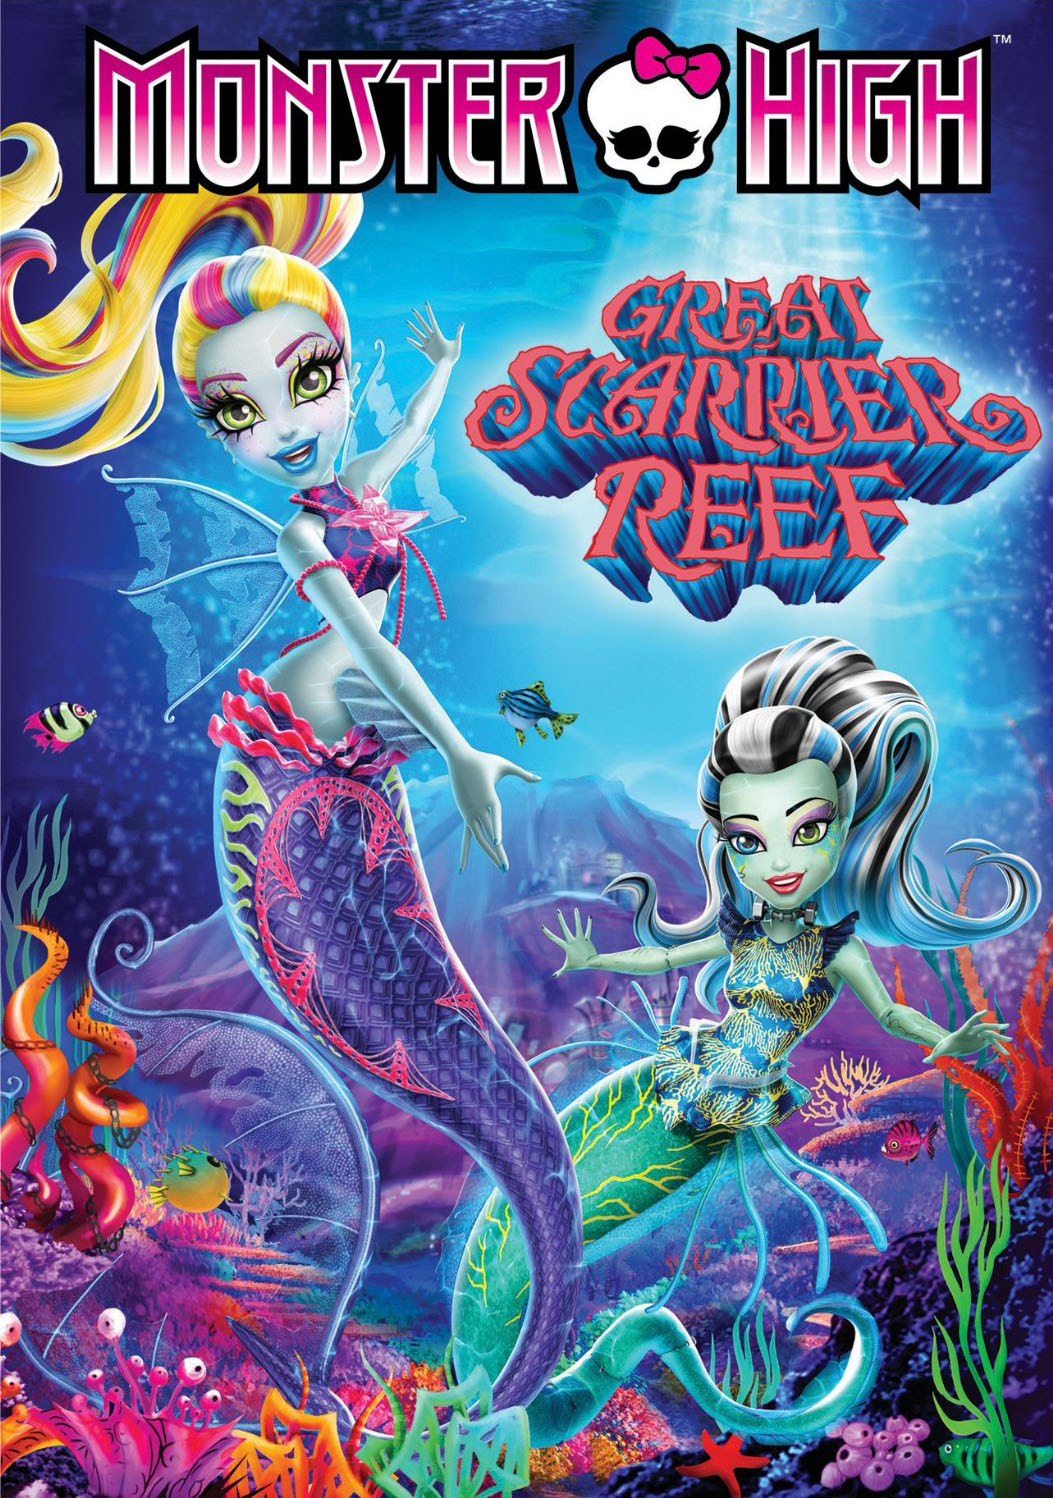 Monster High: Great Scarrier Reef [DVD] - Best Buy